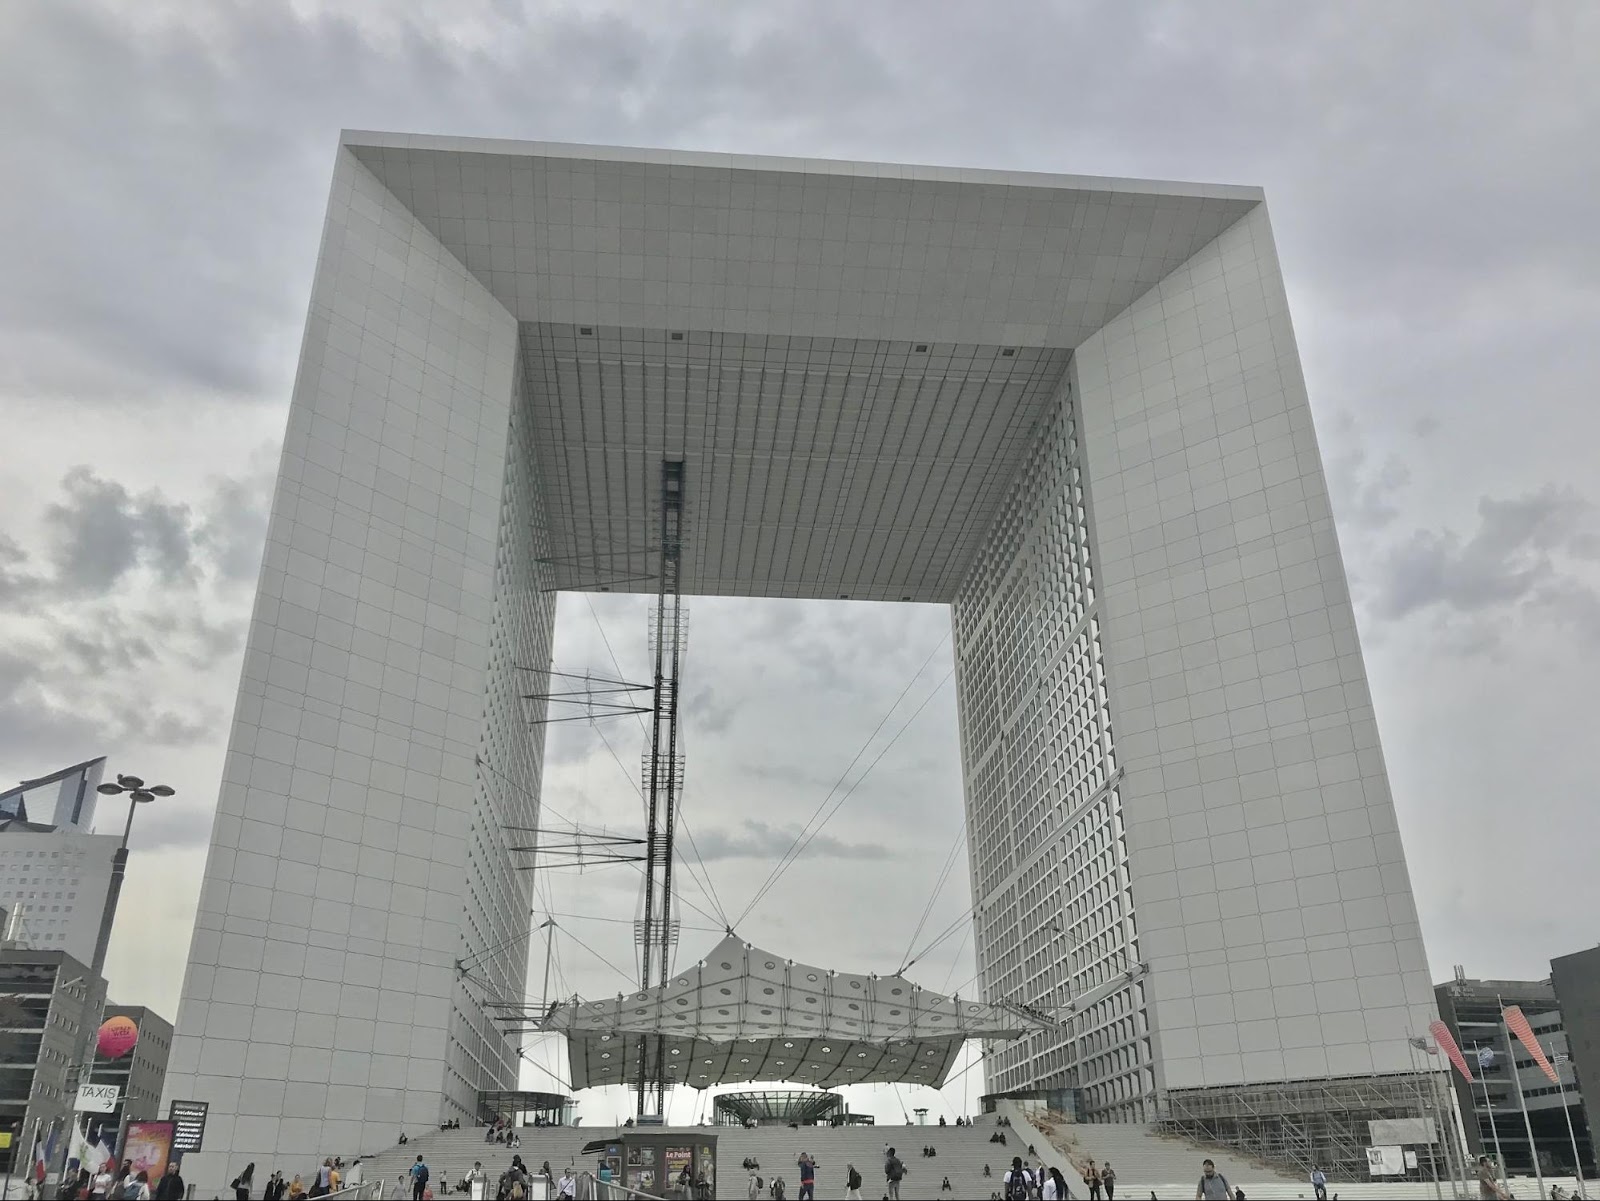 The Grande Arche de la Défense